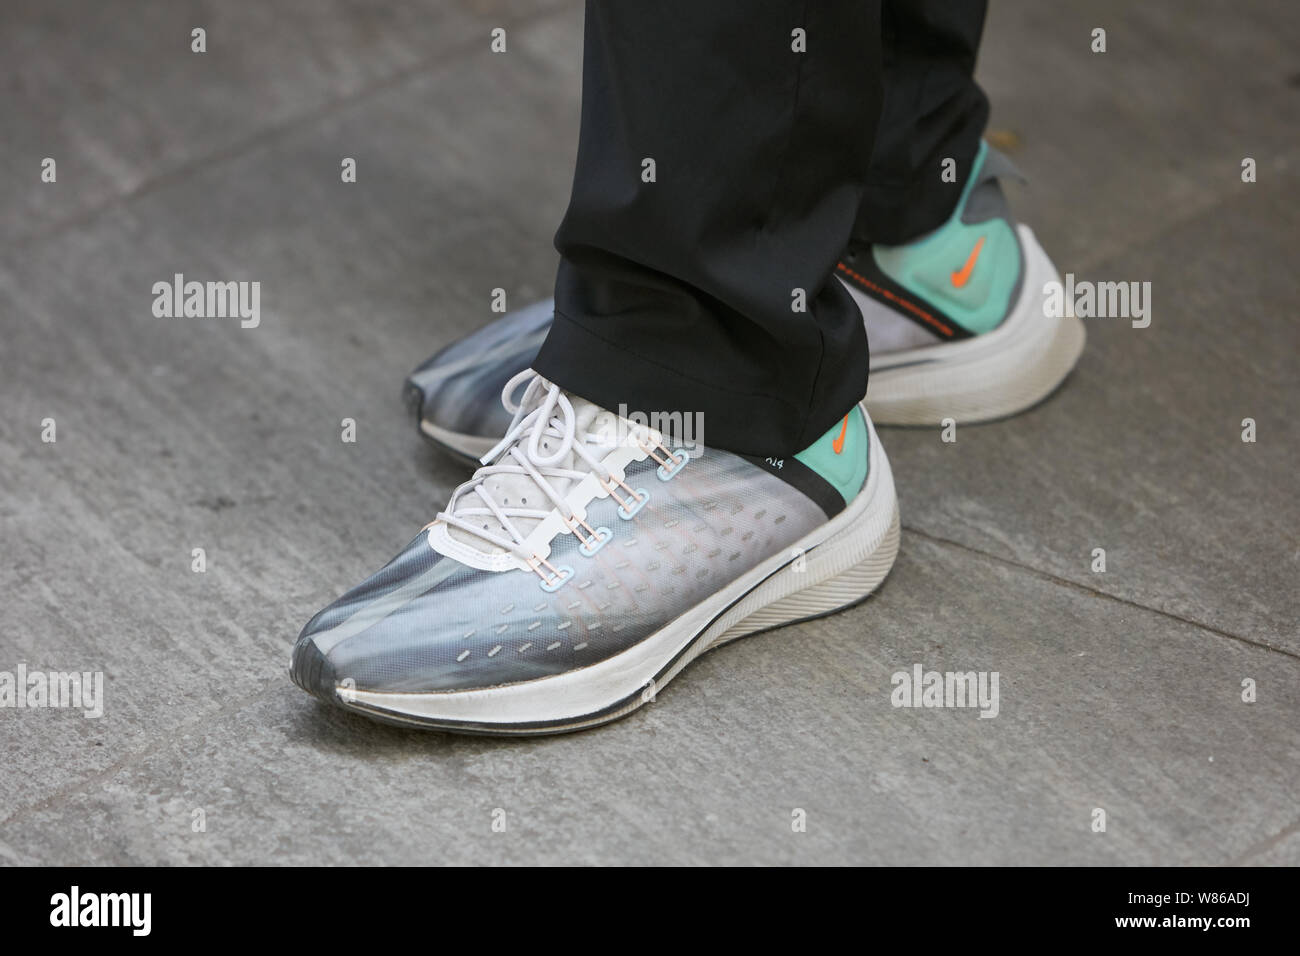 Zapatillas nike turquesa negras fotografías e imágenes de alta resolución -  Alamy